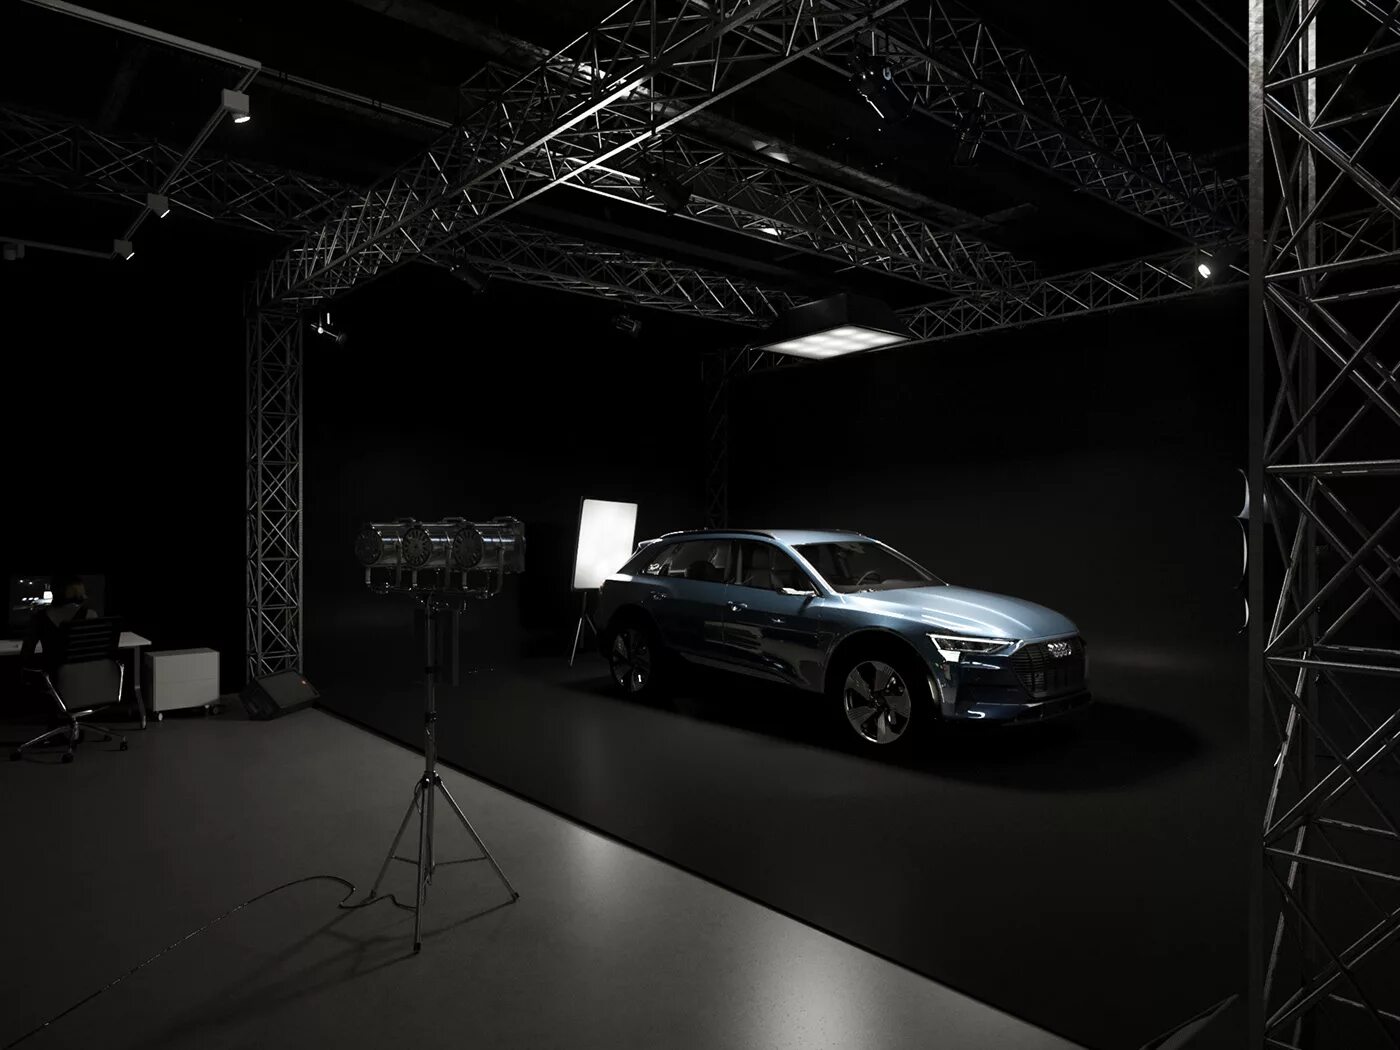 Render scene. Студия для рендеринга машин. Студийный рендер. Audi Scene. 3d Studio Scene rendering.